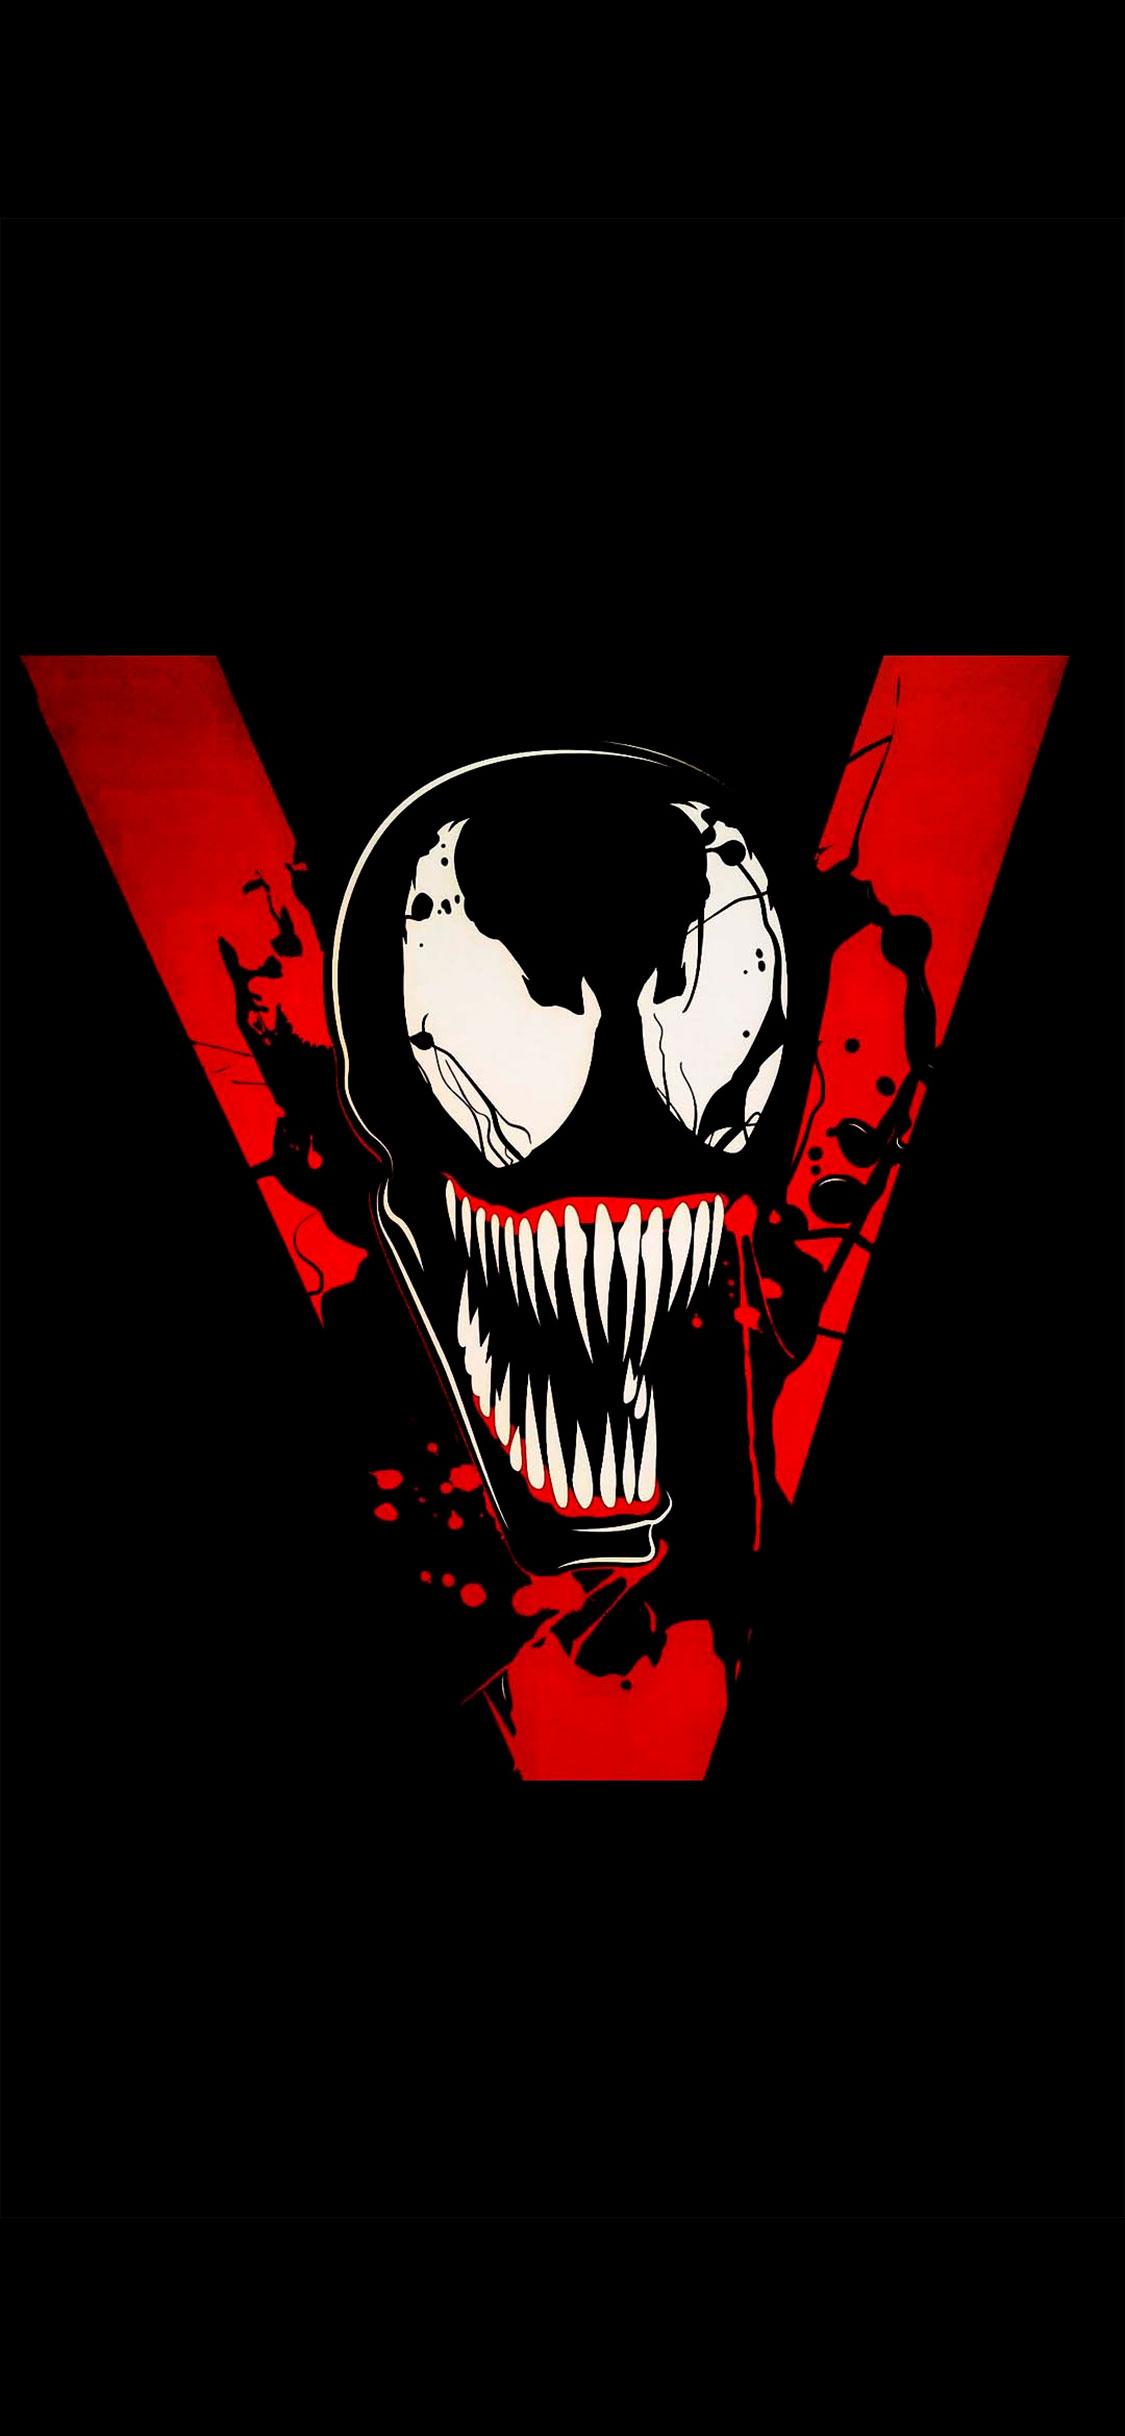 Venom Wallpaper for iPhone X, 6